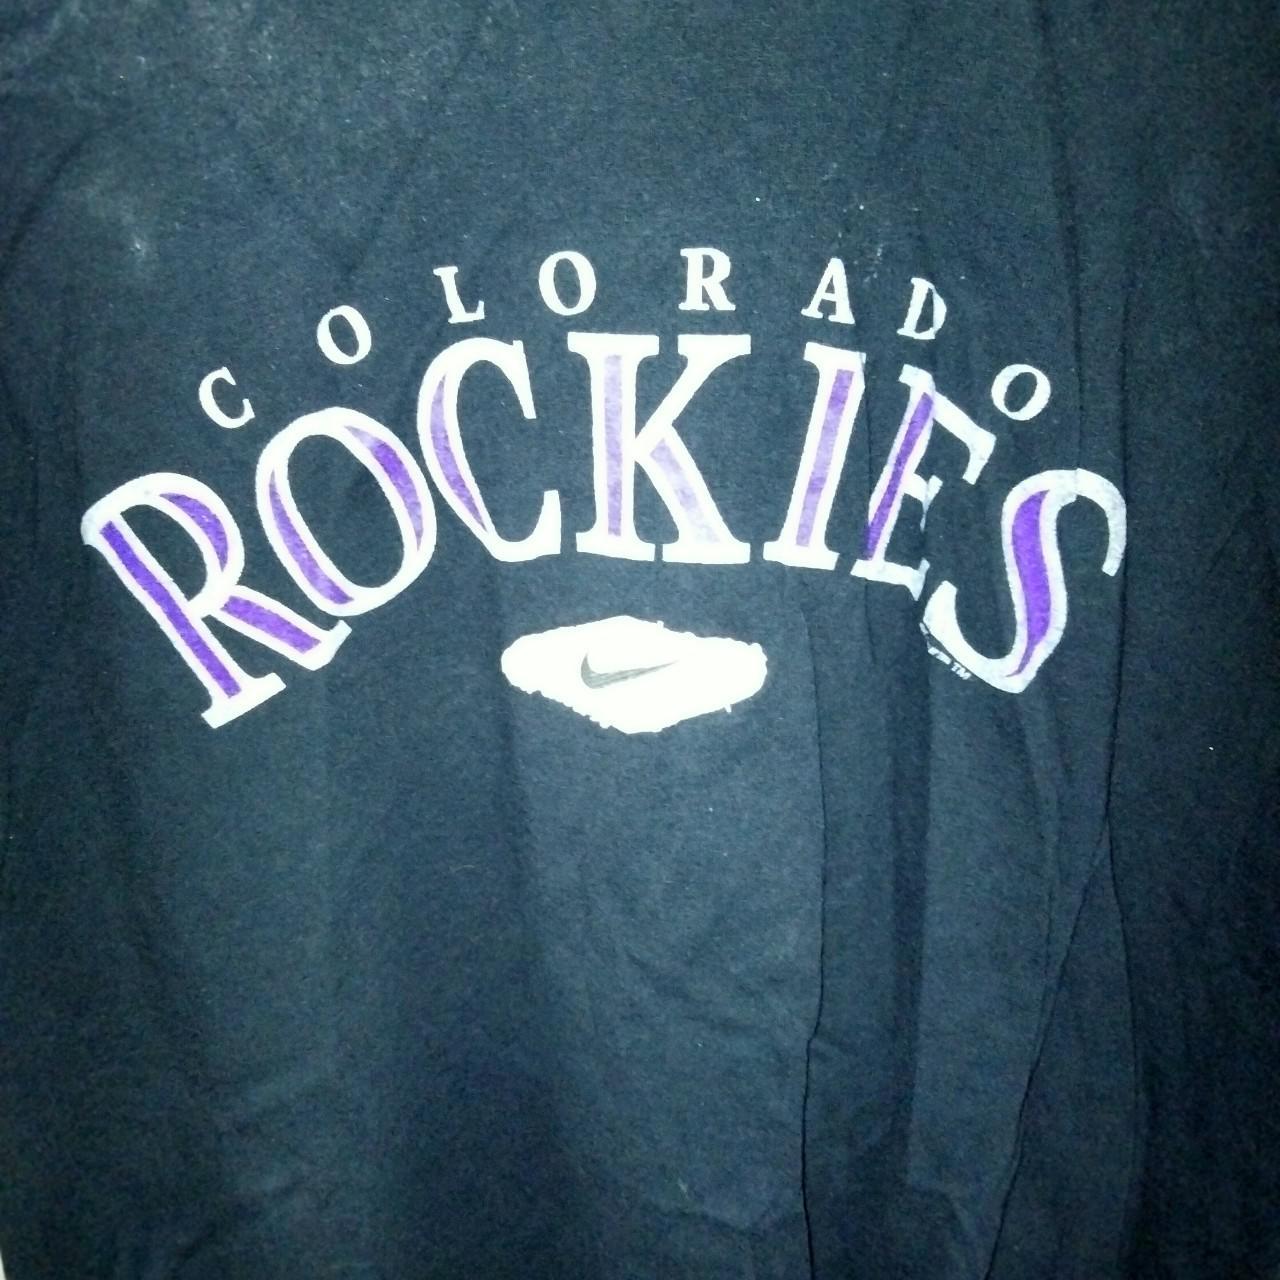 Vintage 90s Peanuts Snoopy x Colorado Rockies Shirt - Depop